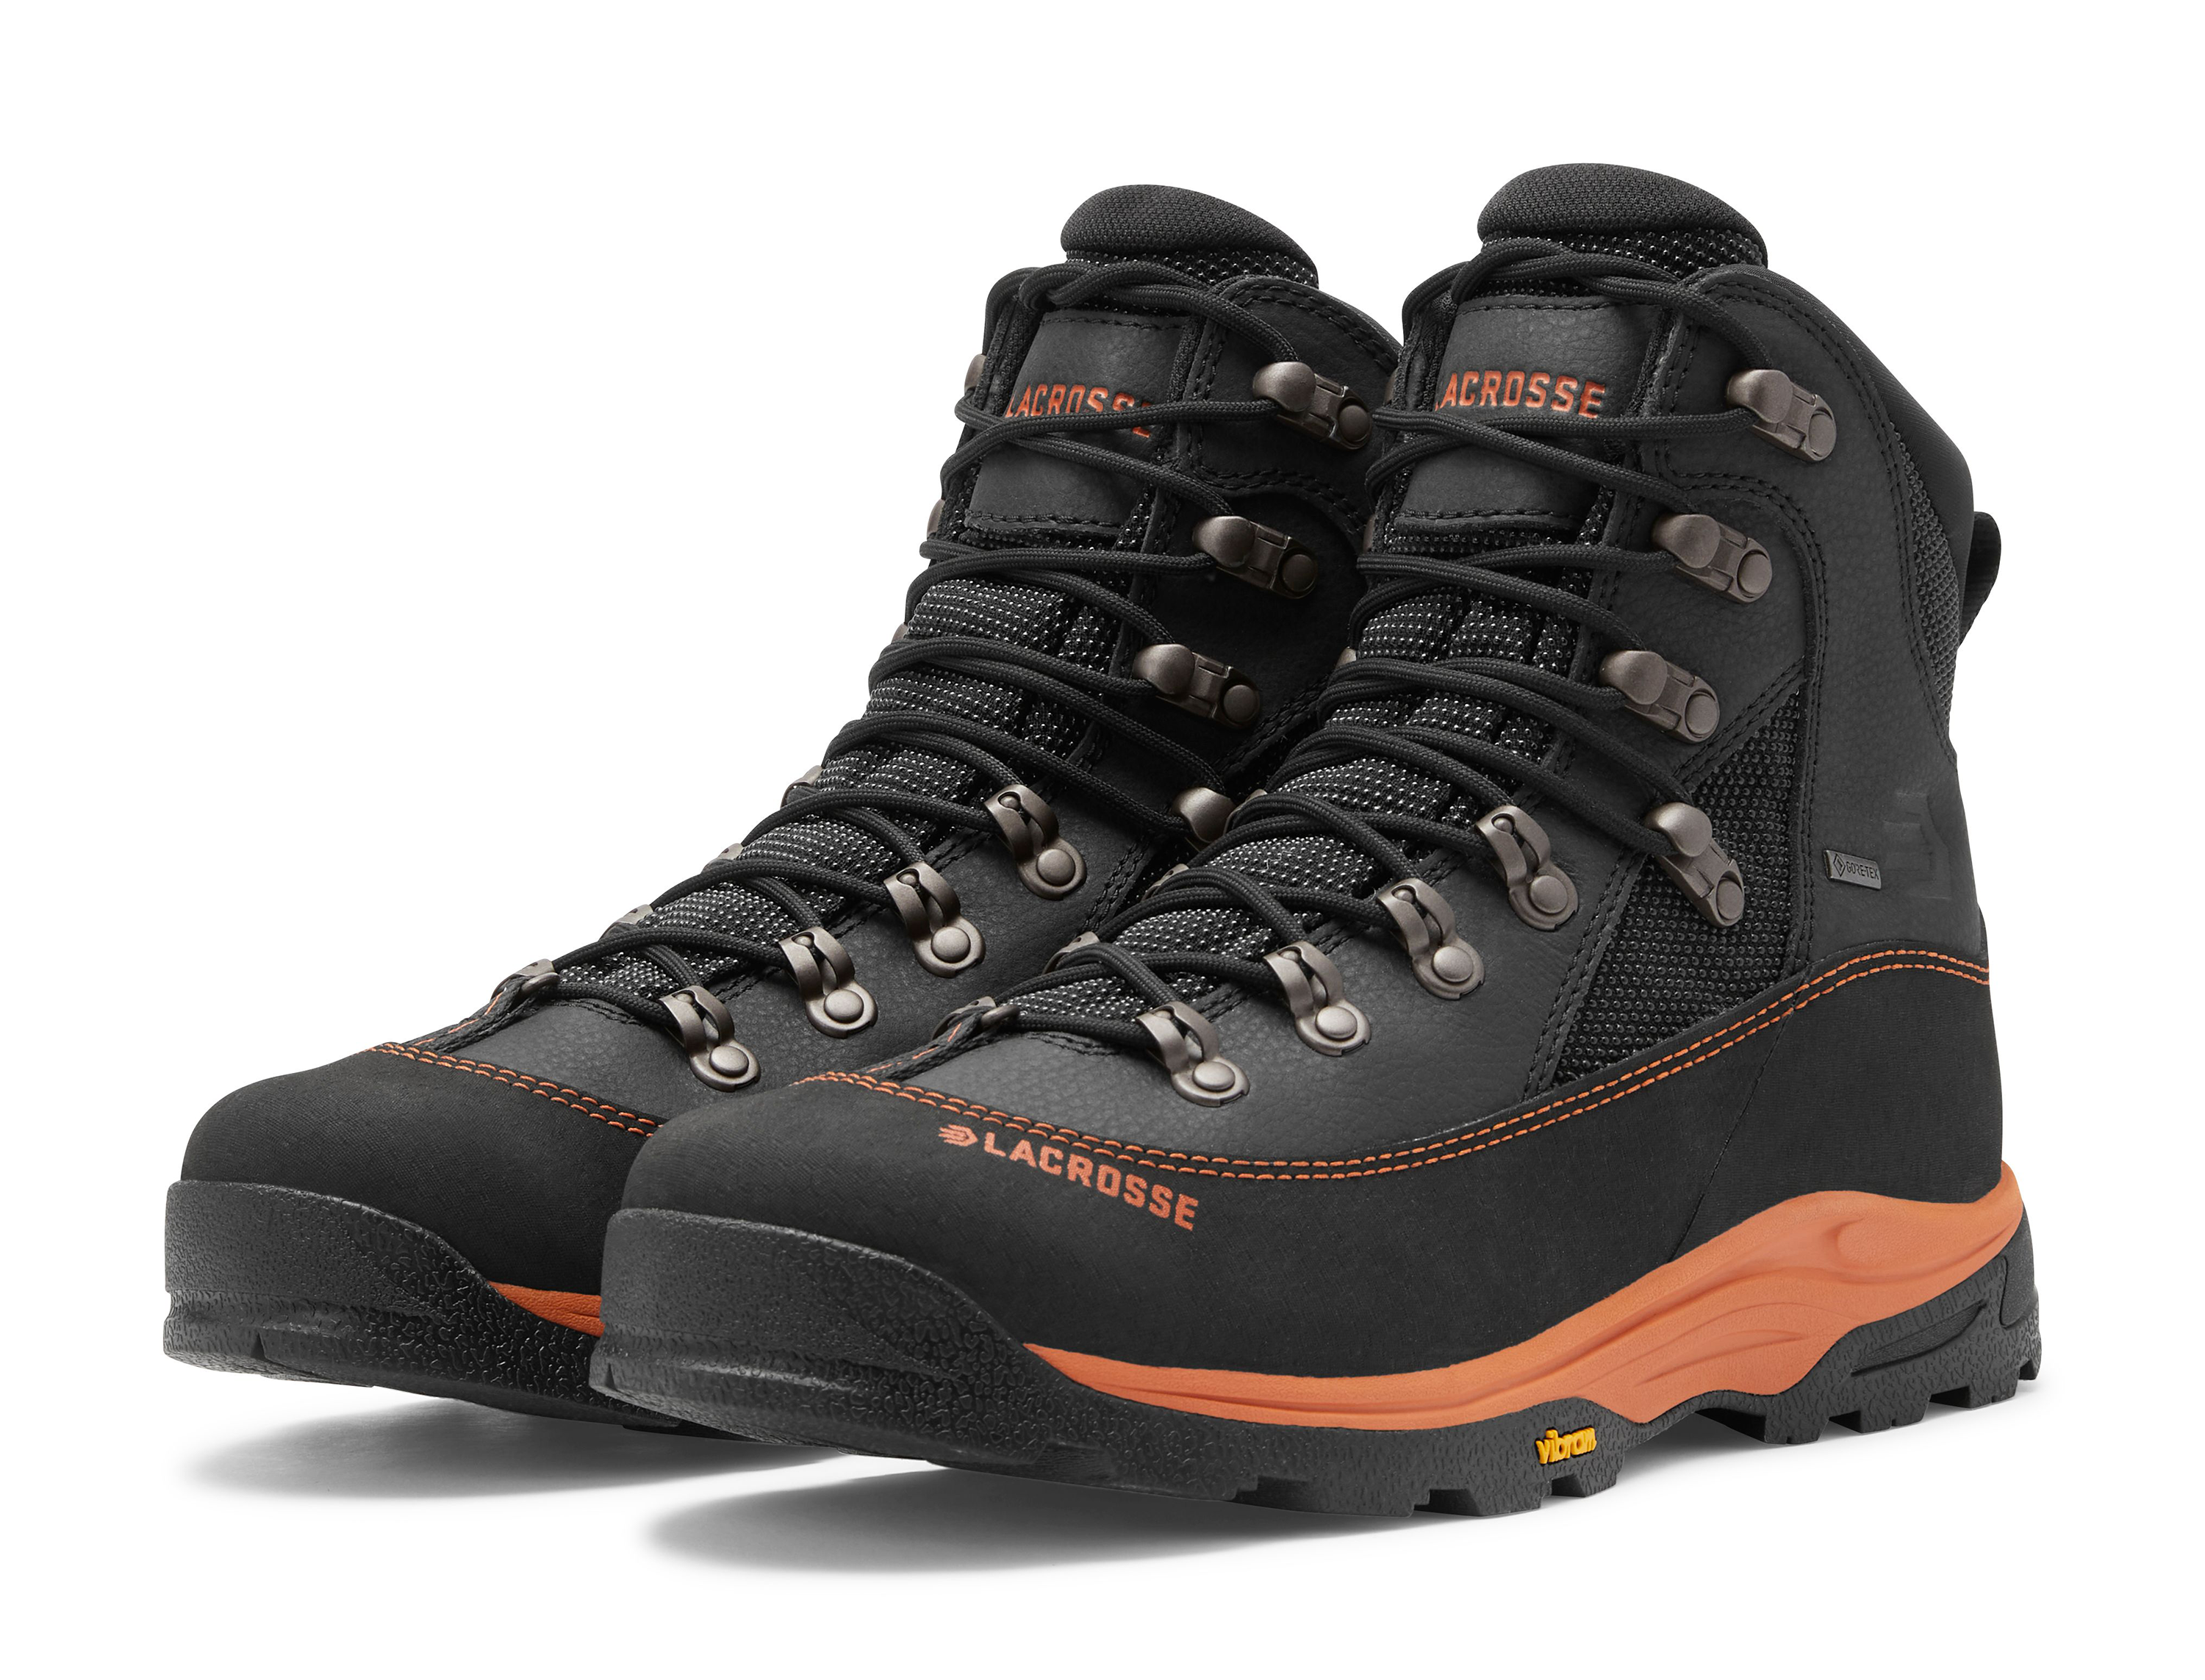 LaCrosse Ursa MS GORE-TEX Hunting Boots for Men - Gunmetal/Orange - 7.5M